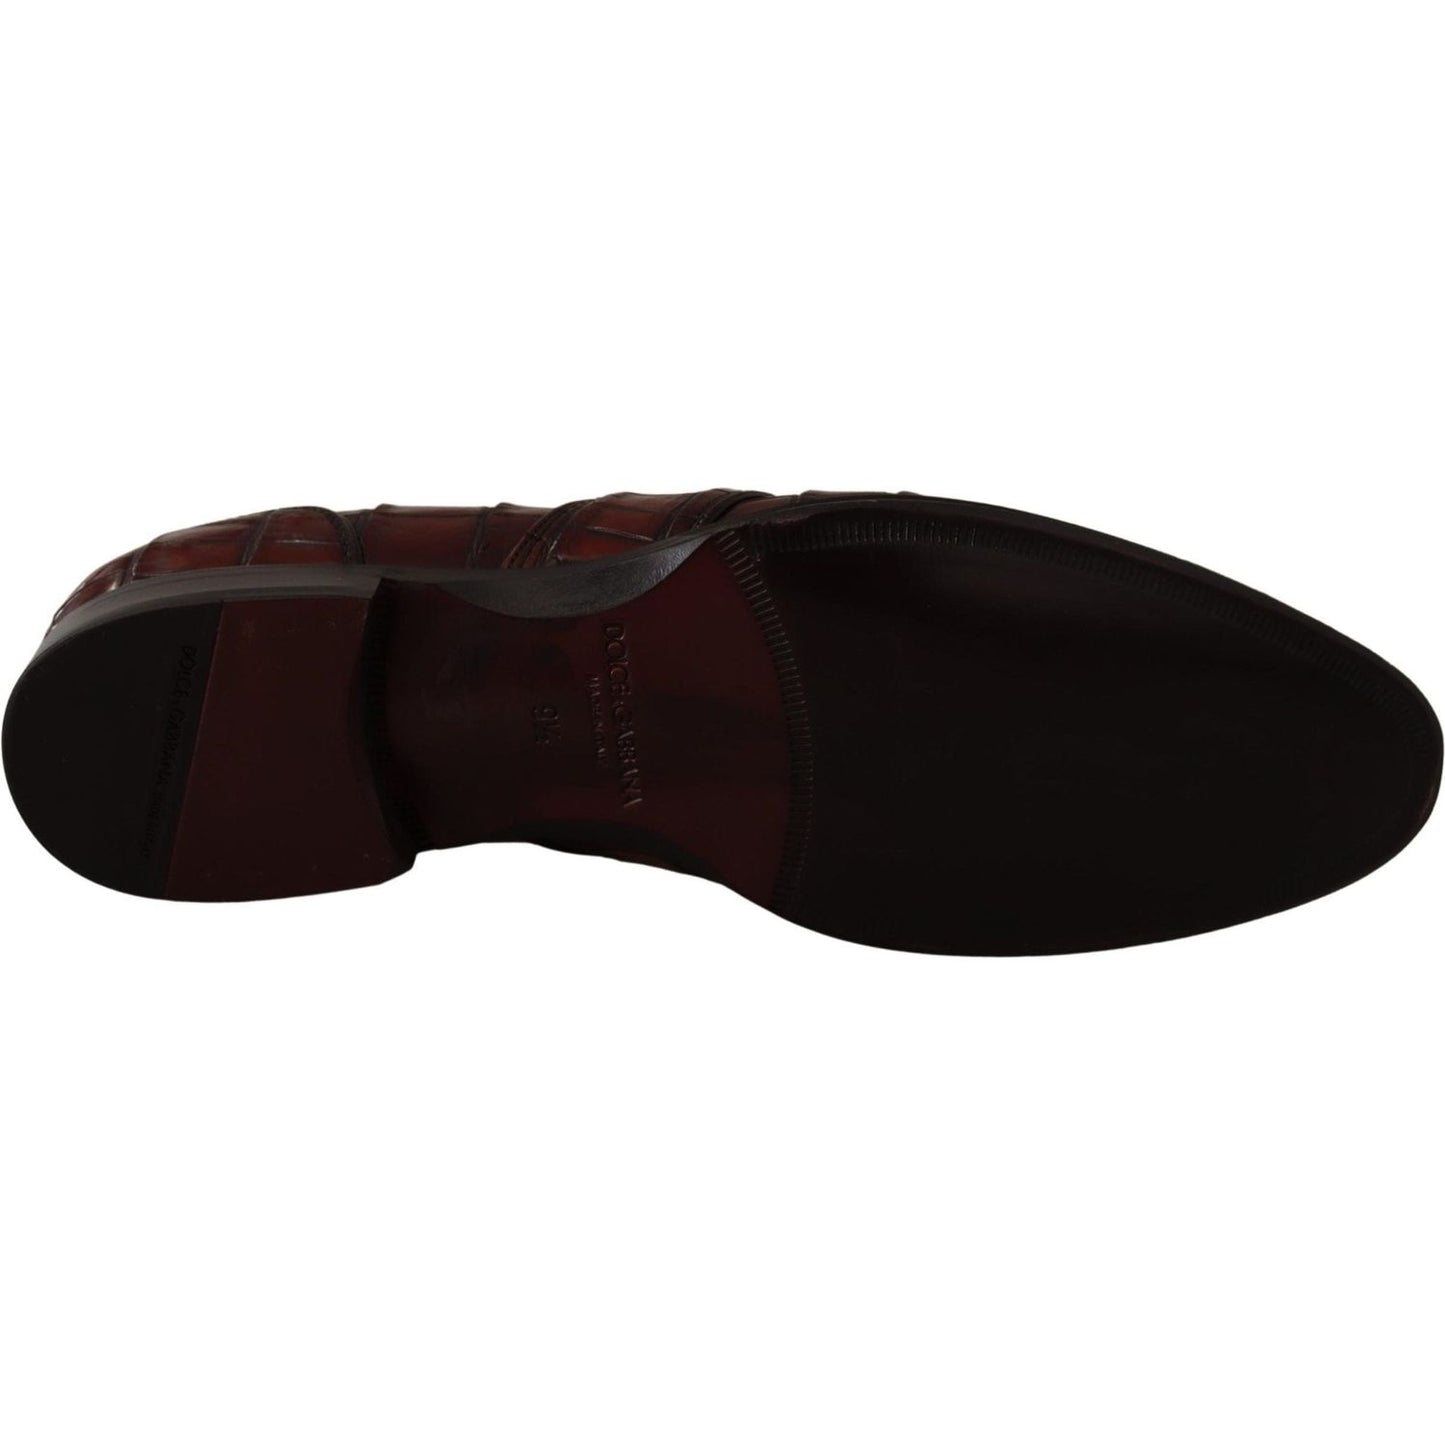 Dolce & Gabbana Exotic Croc Leather Bordeaux Loafers bordeaux-exotic-leather-dress-derby-shoes